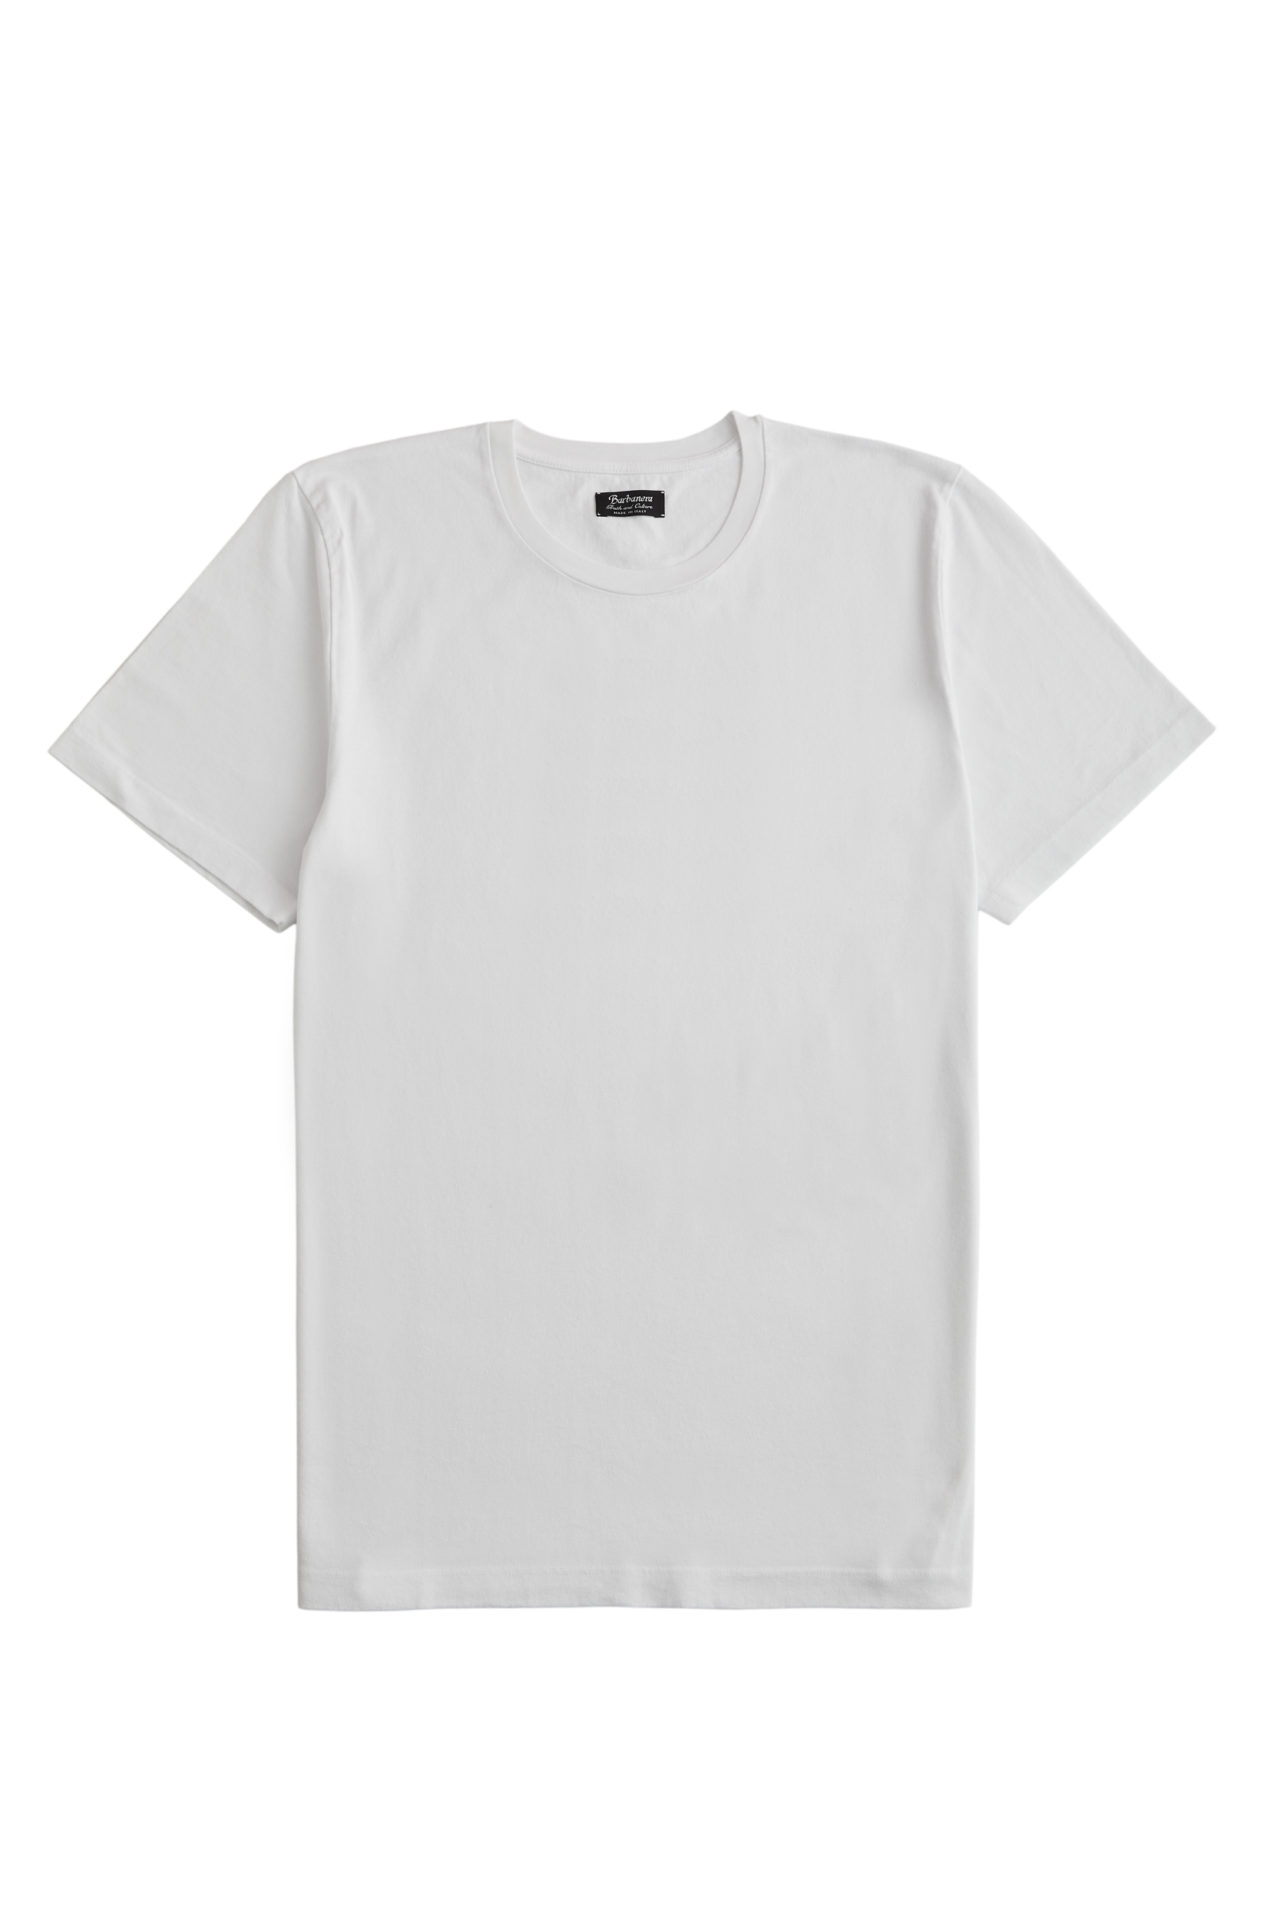 Plain White Raw T-Shirt - Barbanera